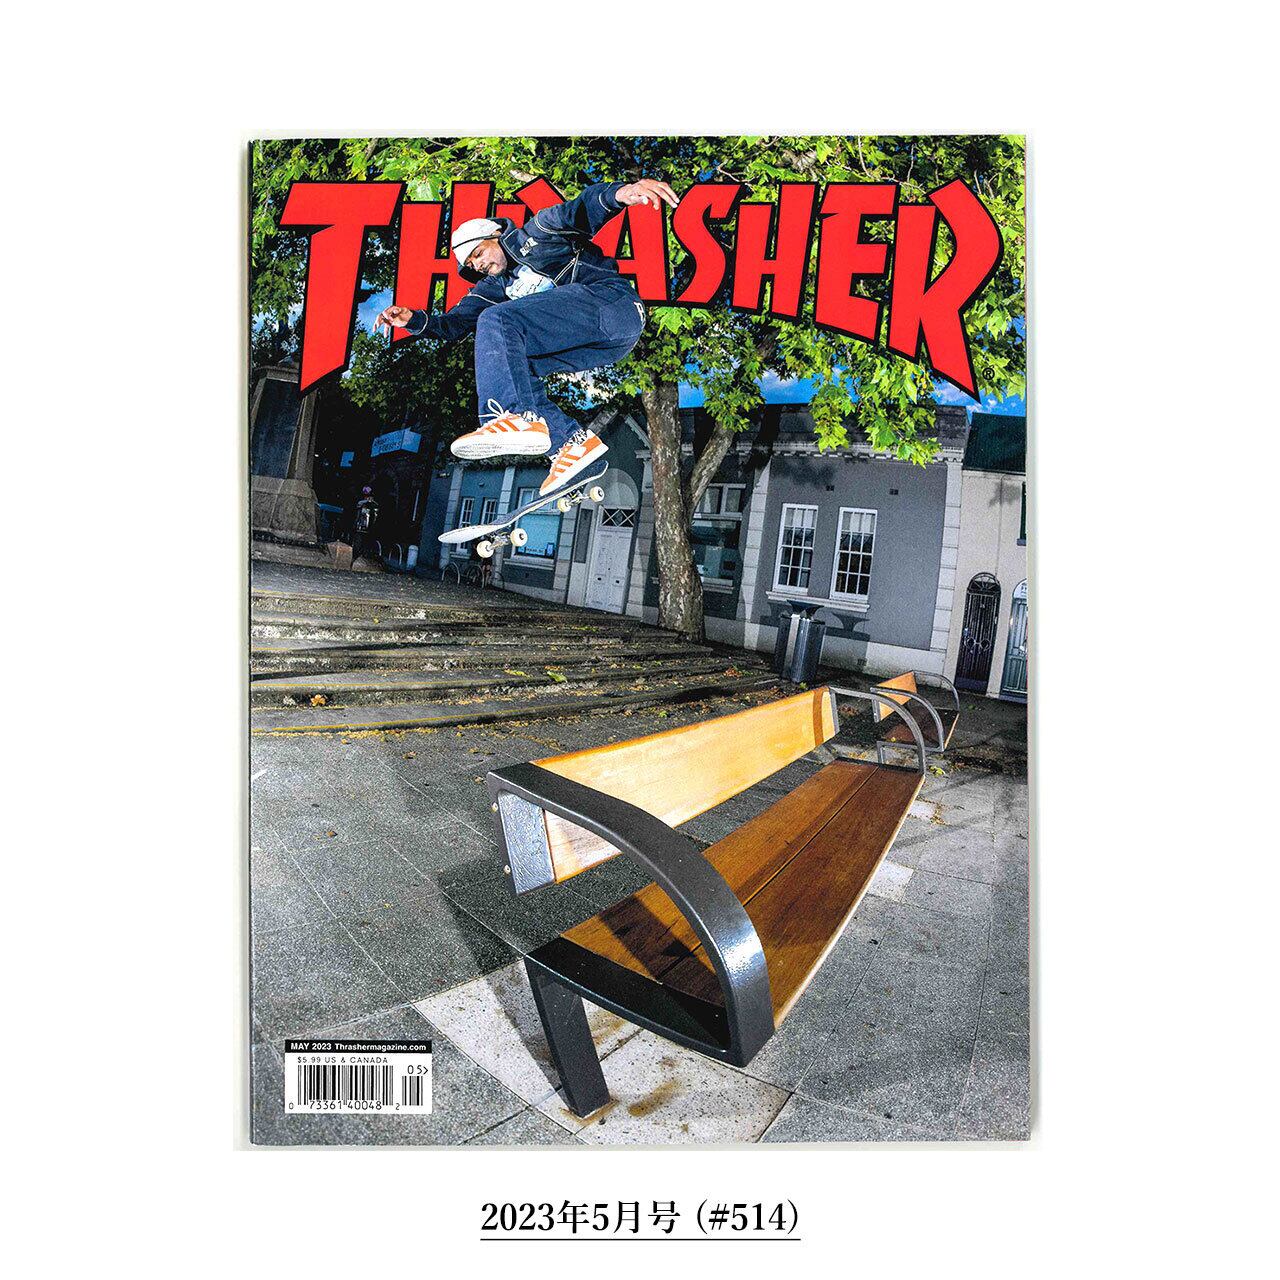 THRASHER (スラッシャー) Thrasher Magazine [雑誌] 2023年 5月号 (#514) / 4月号 (#513)  スラッシャーマガジン 雑誌 スケート雑誌 スケボー スケートボード High Speed Productions, Inc.